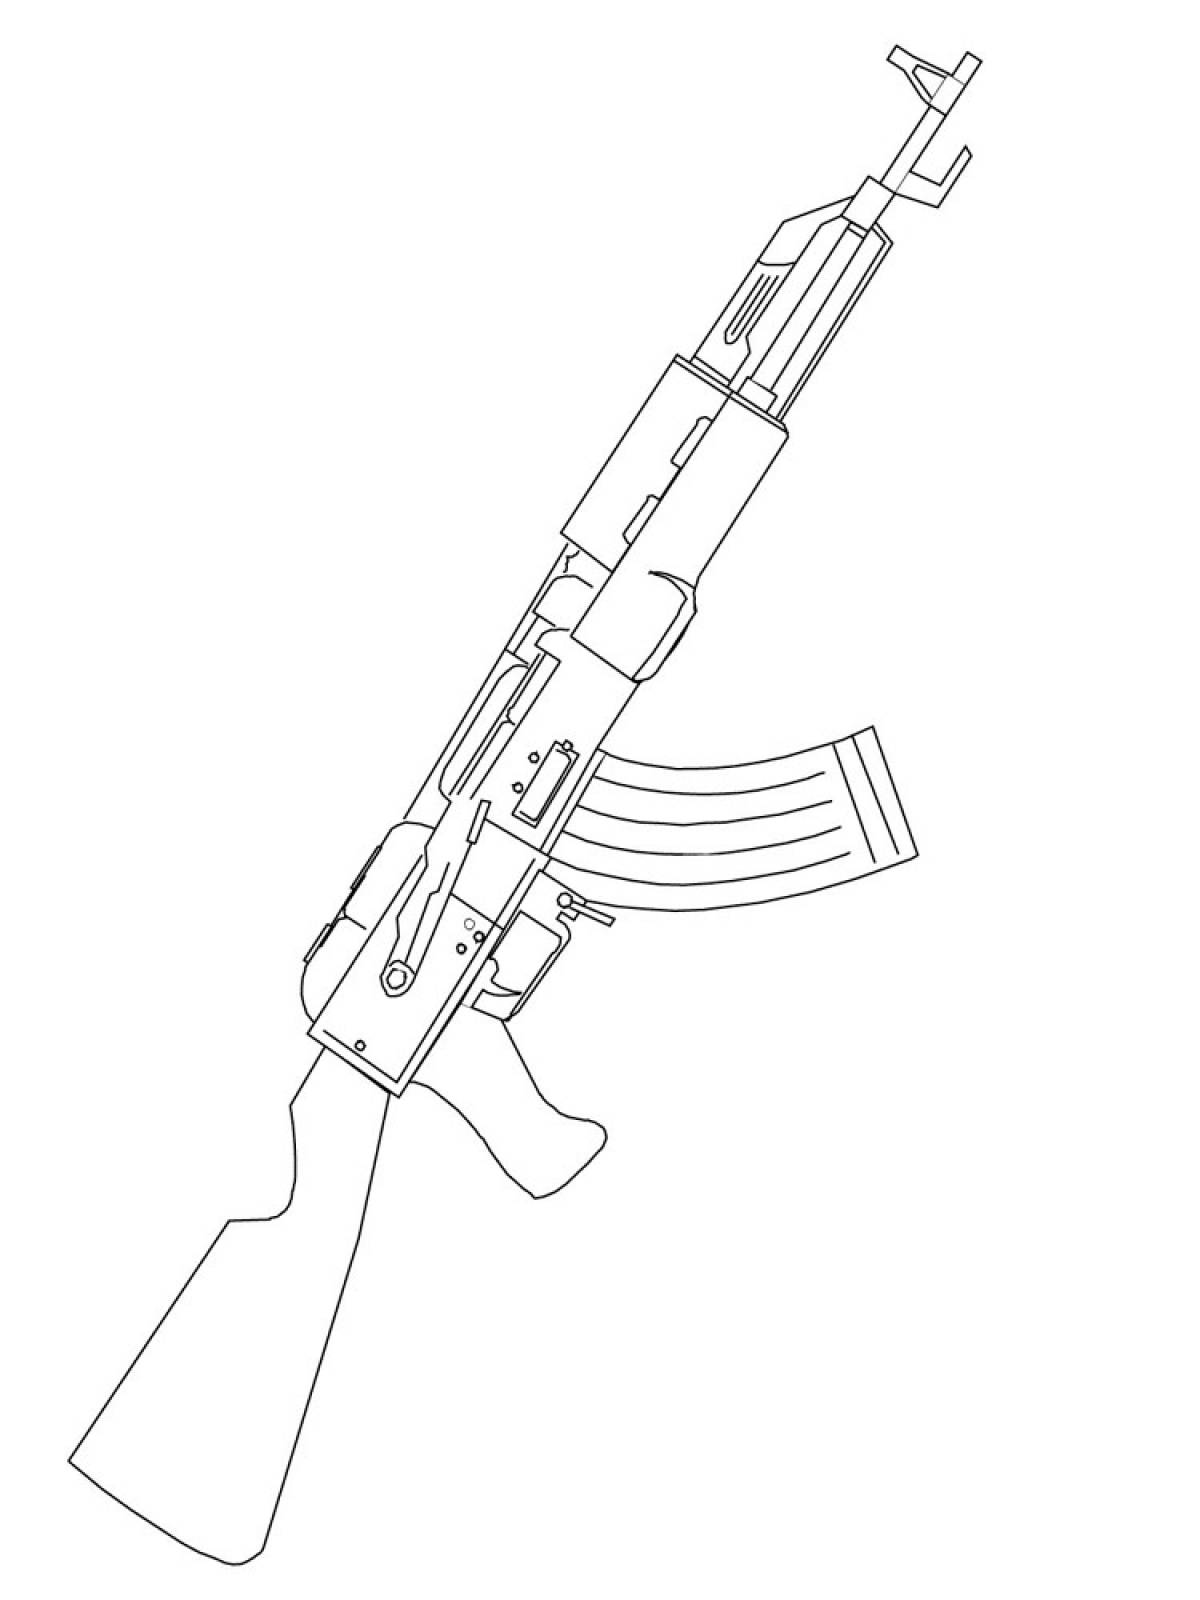 Kalashnikov assault rifle 8